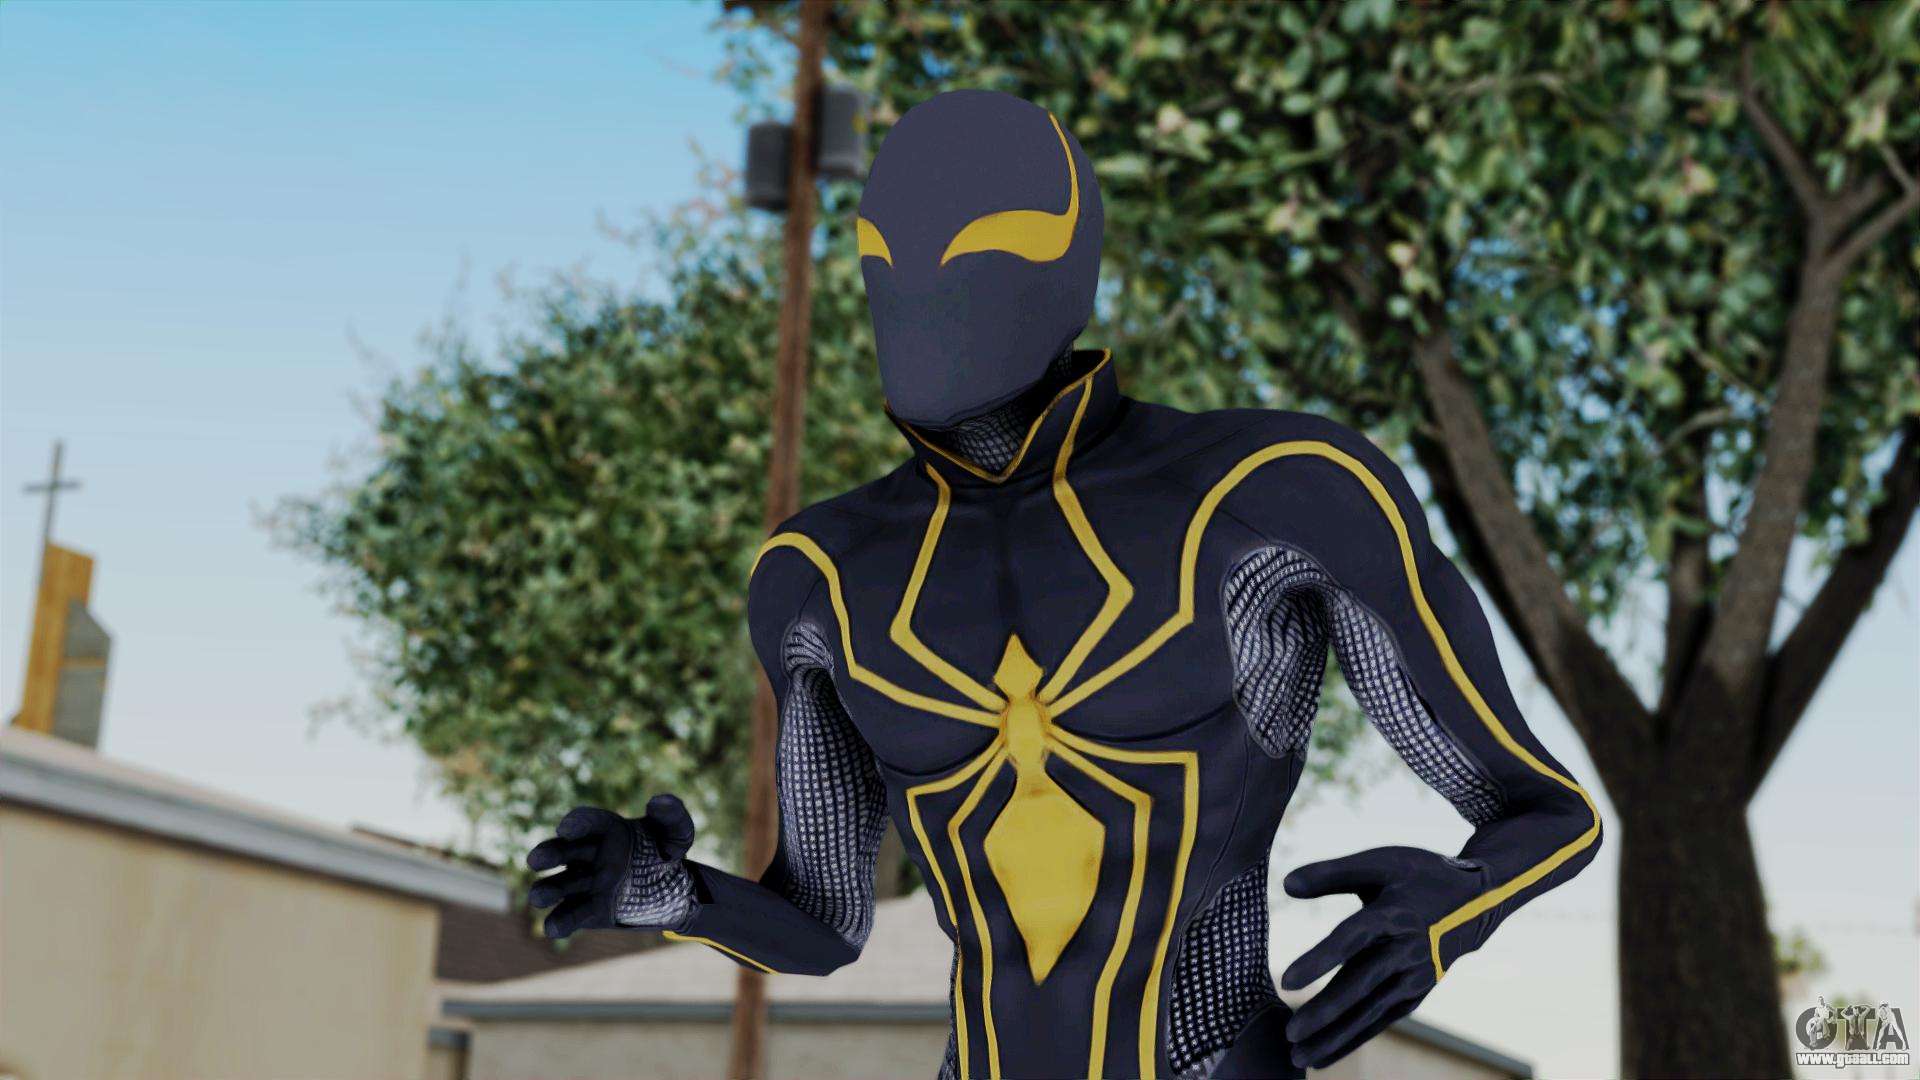 spider armor mk 2